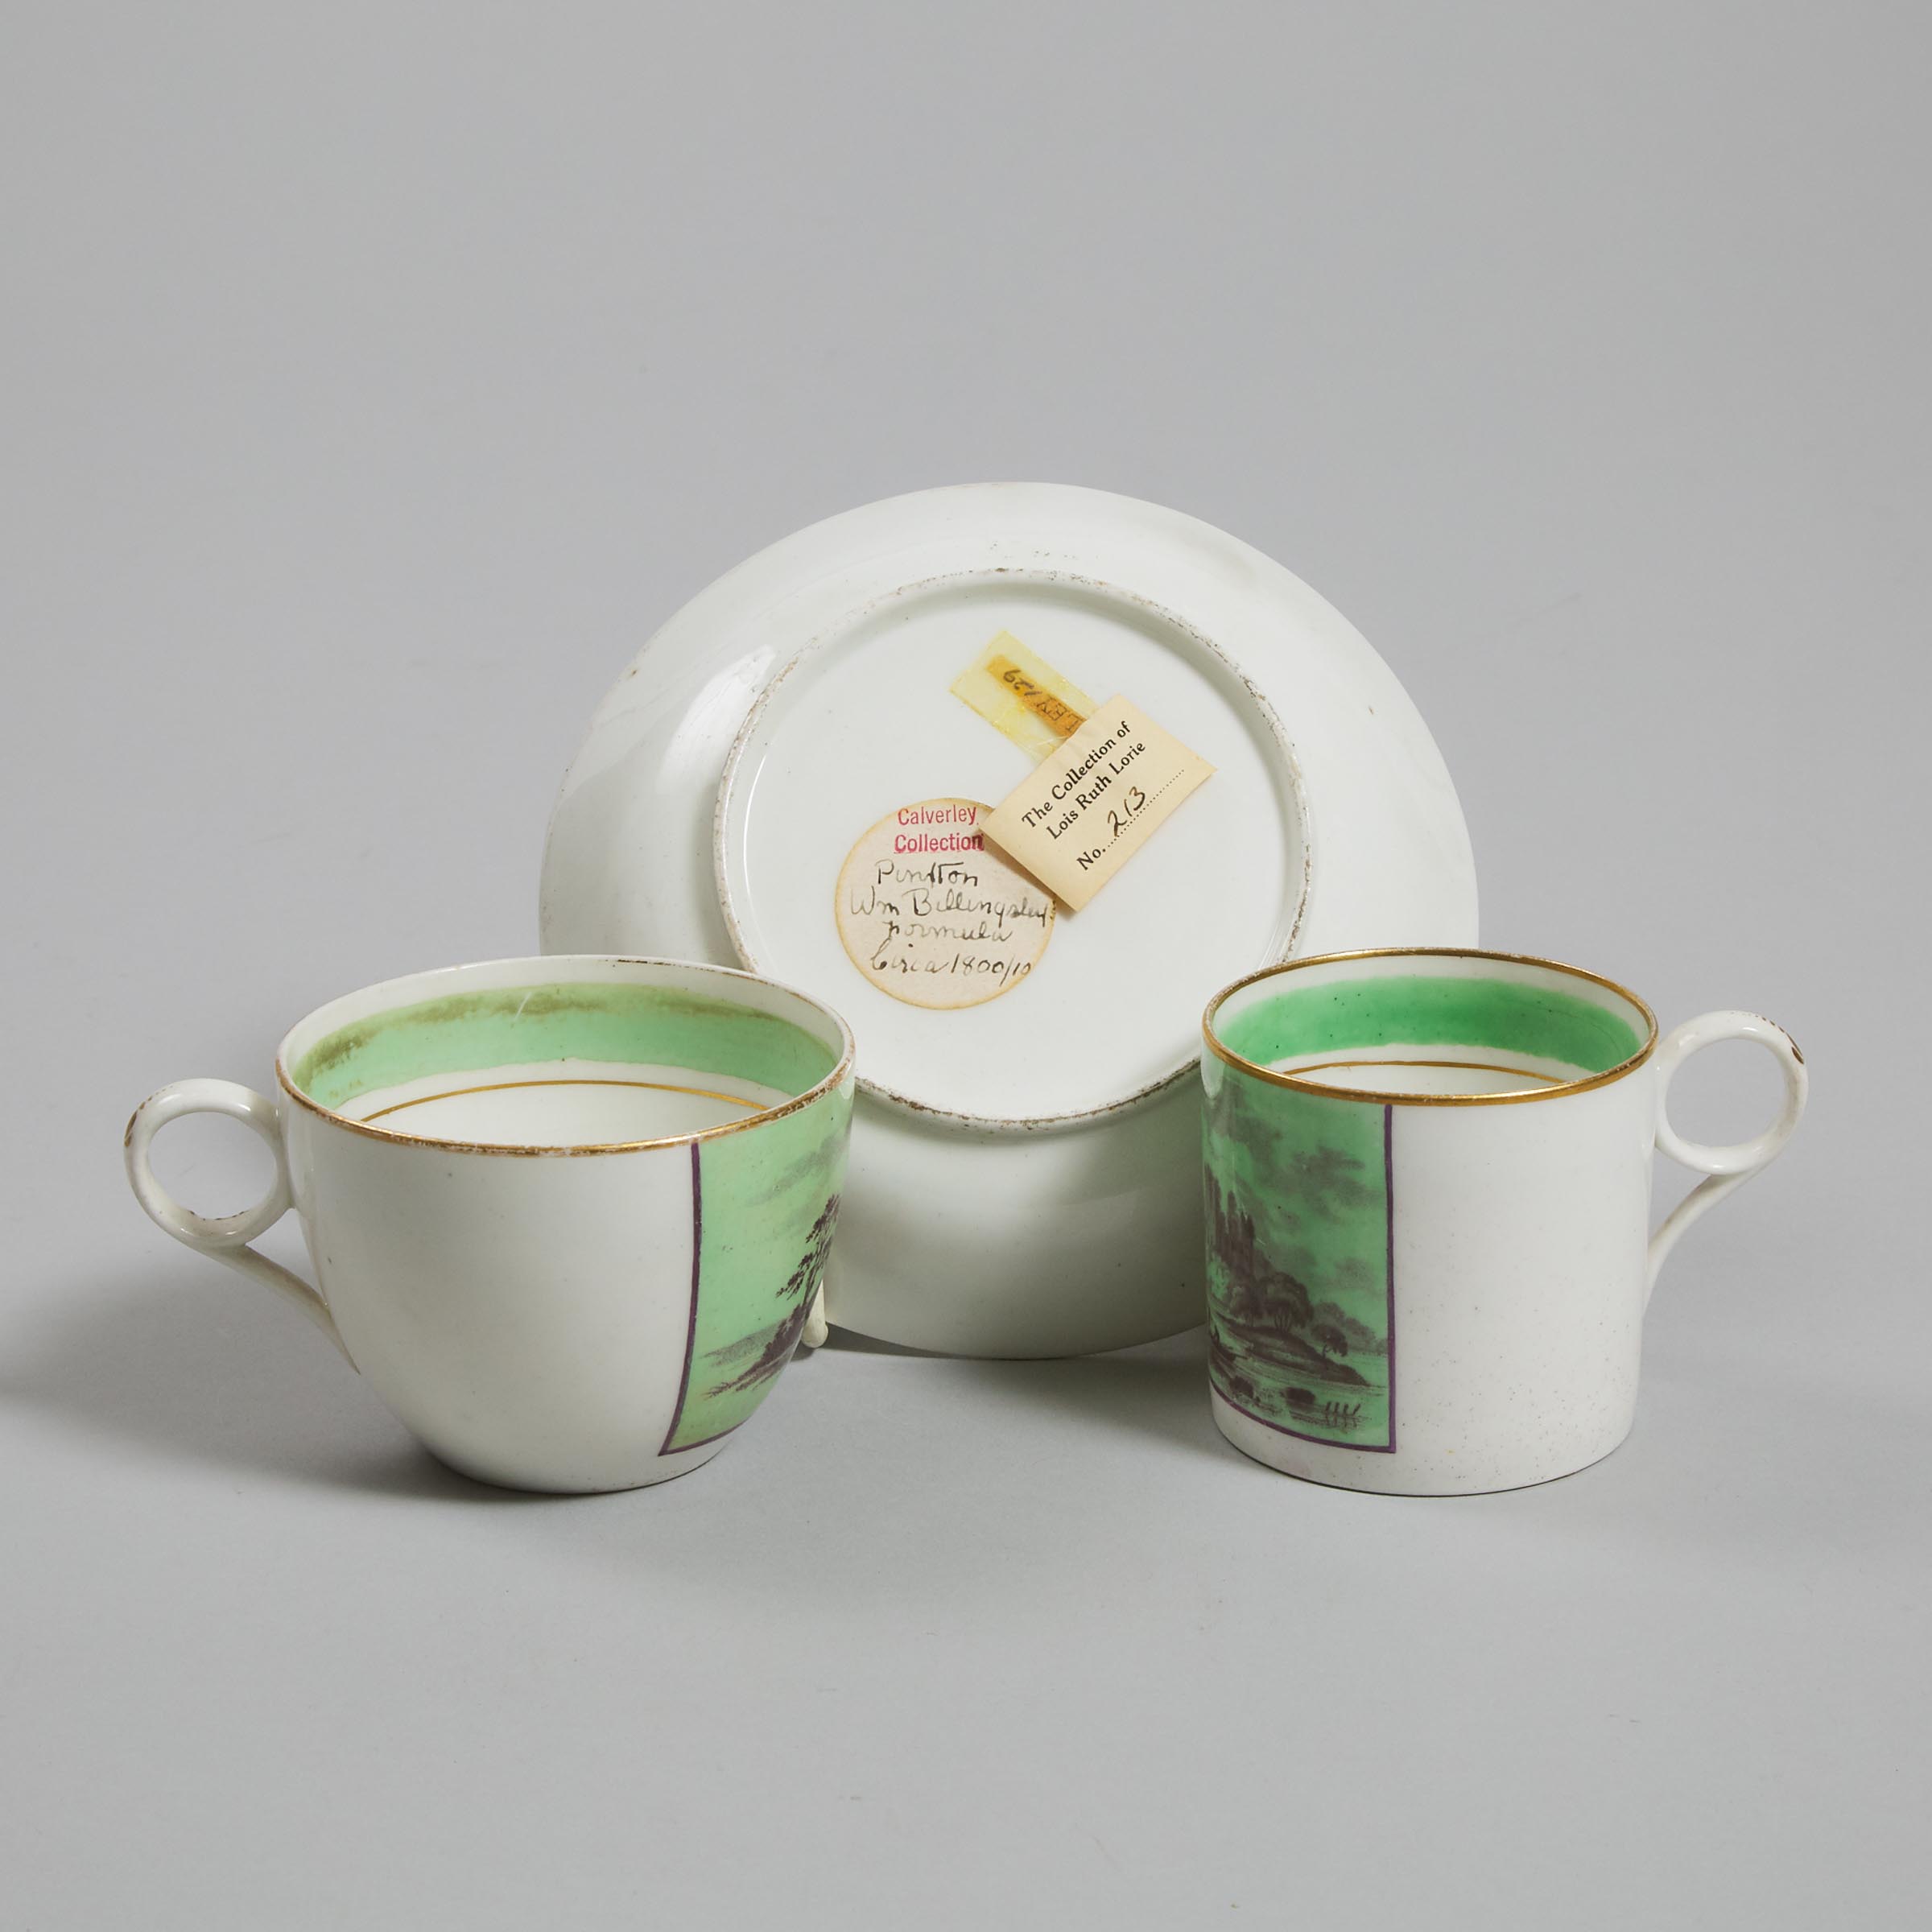 English Porcelain Trio, c.1800-10